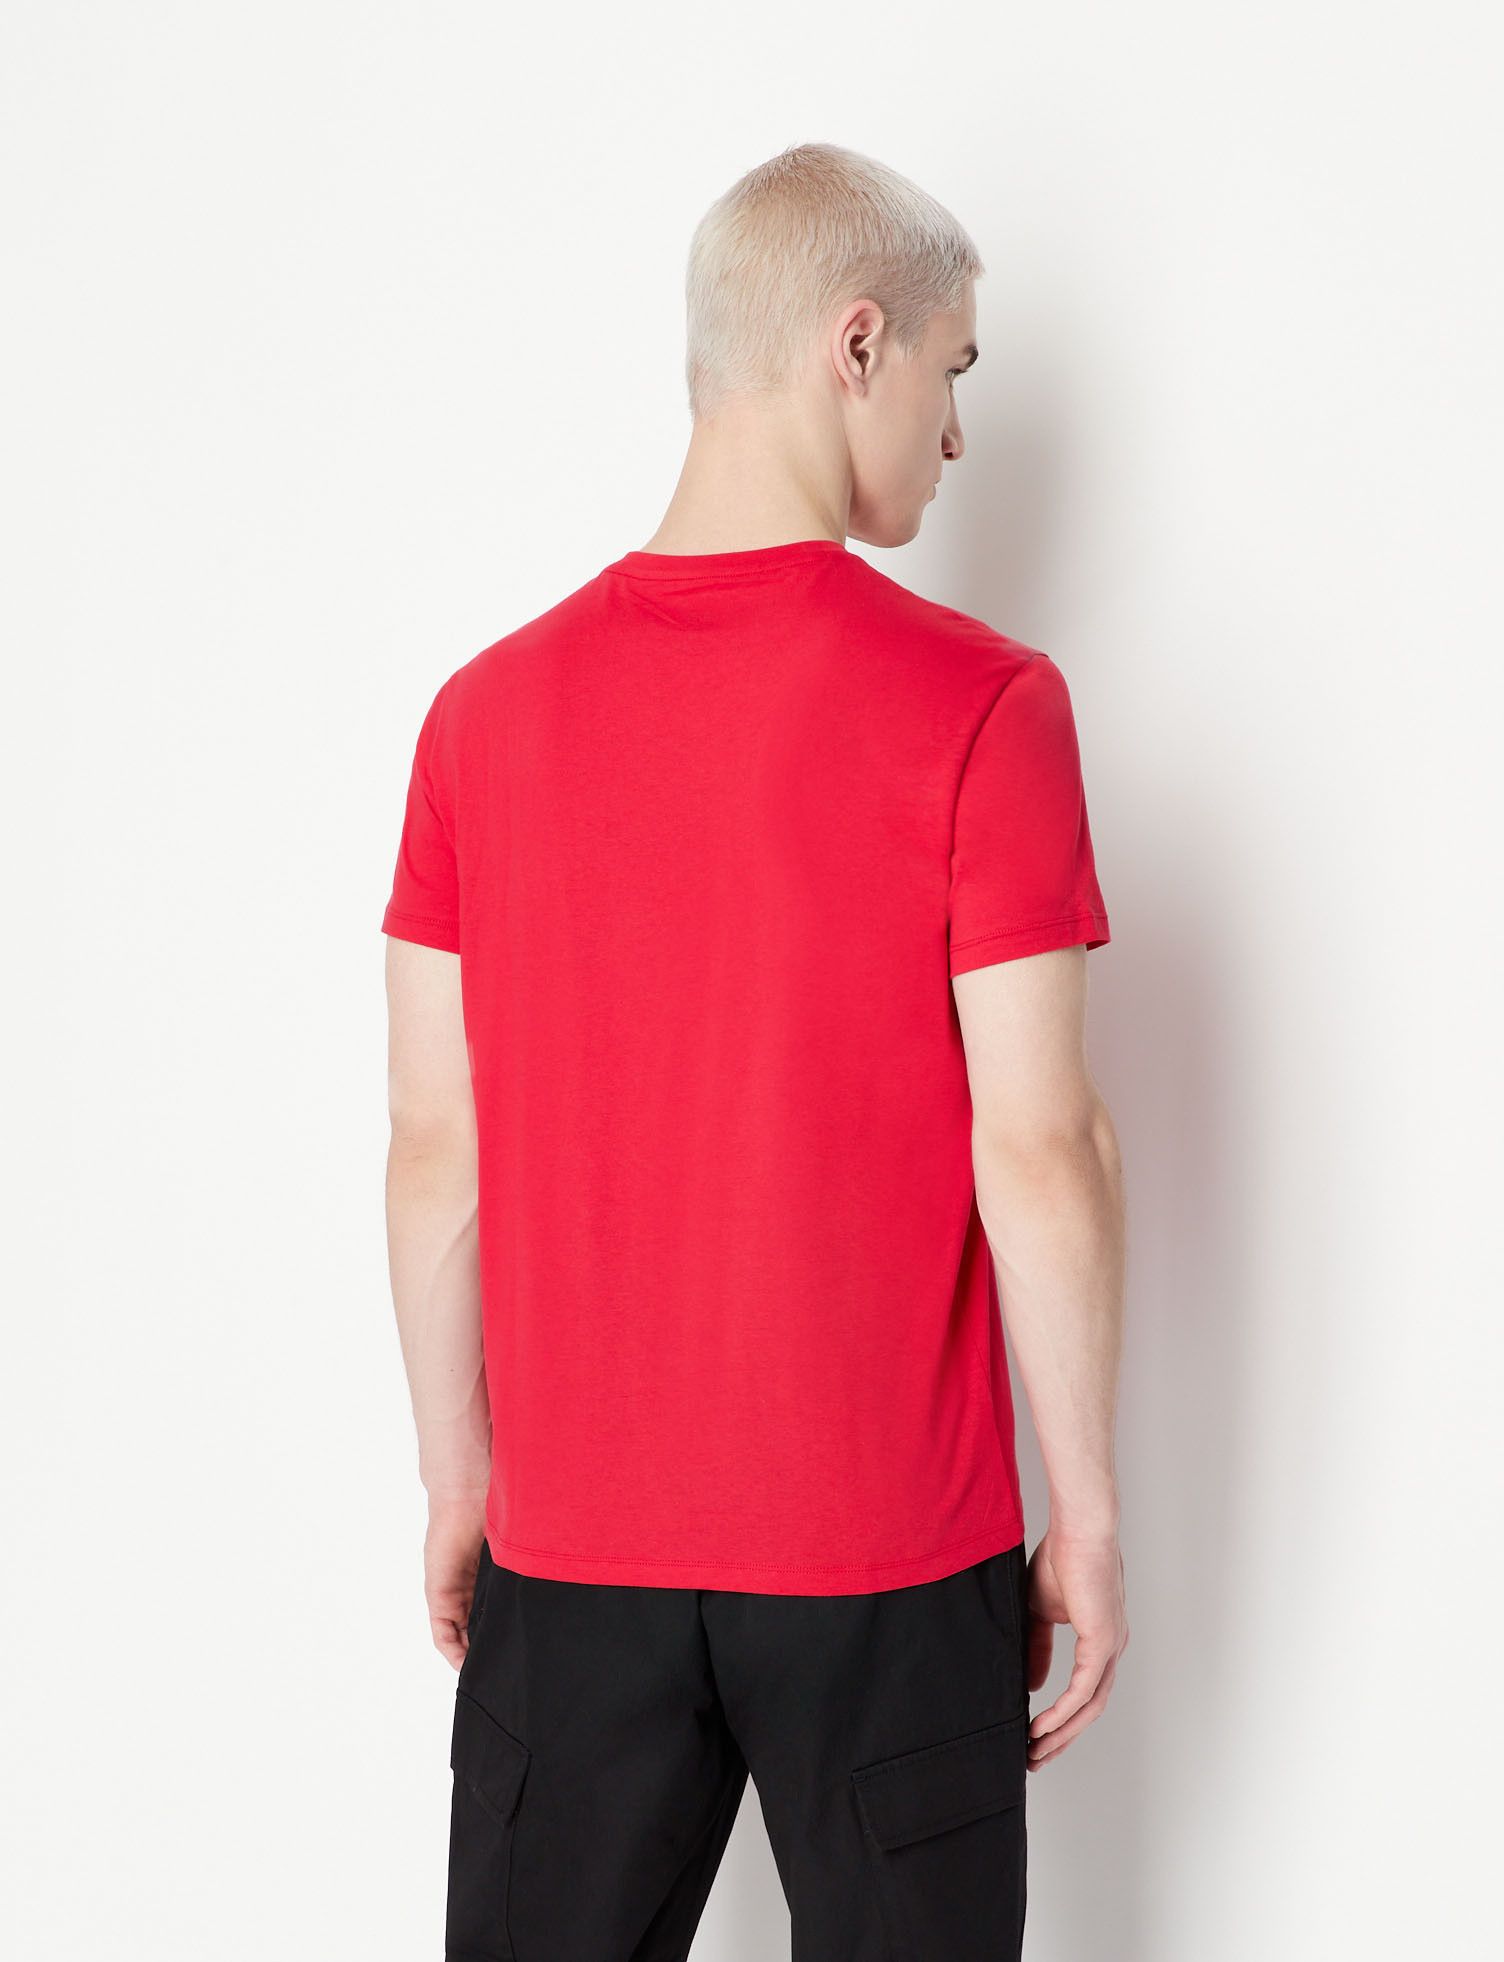 Armani Exchange - Regular fit T-shirt with logo print, Red, large image number 2